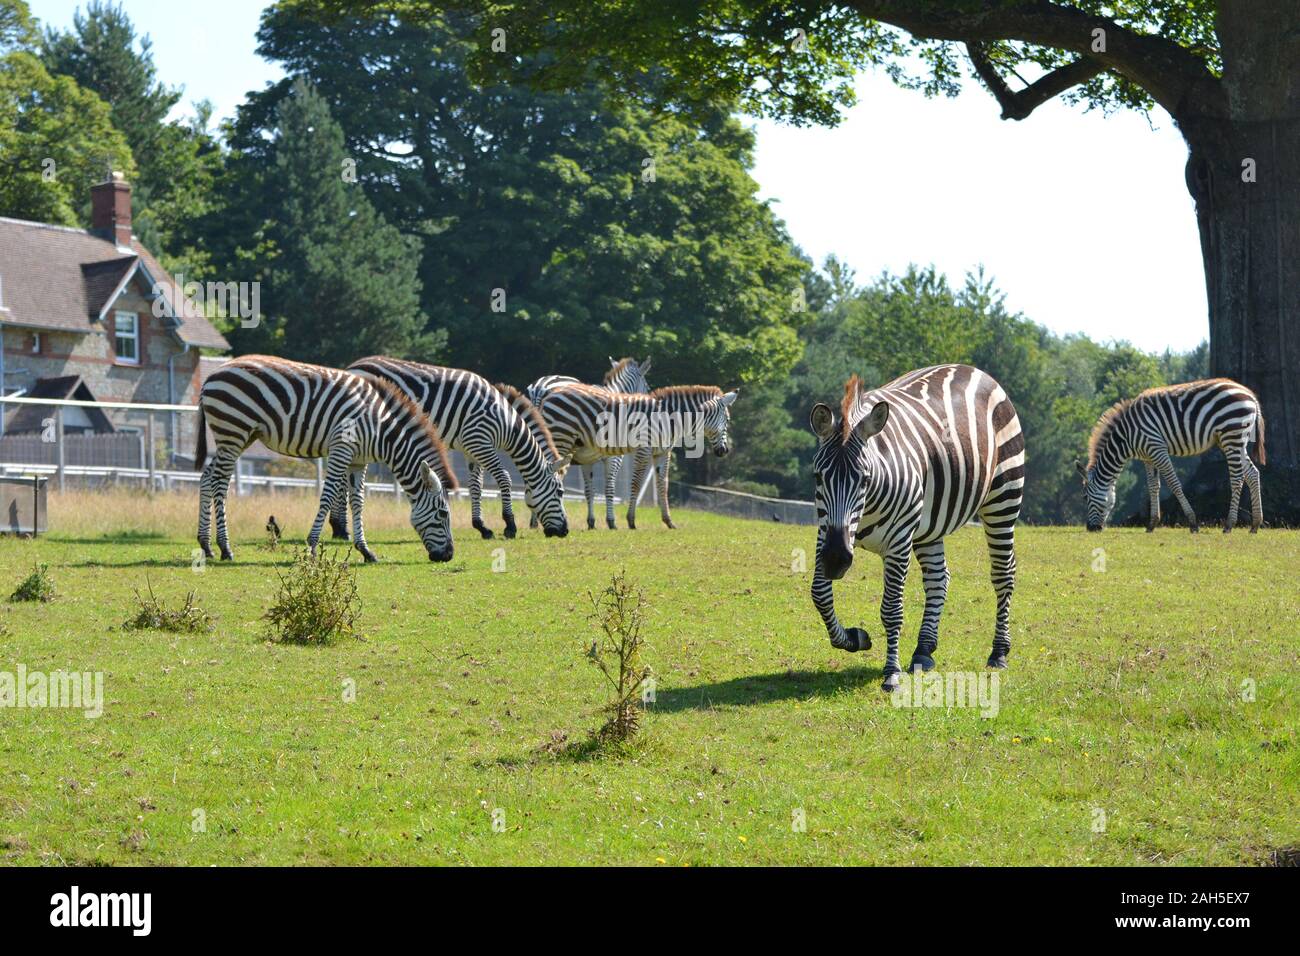 Zebras at Longleat Safari Park, Warminster, Wiltshire, England, UK Stock Photo